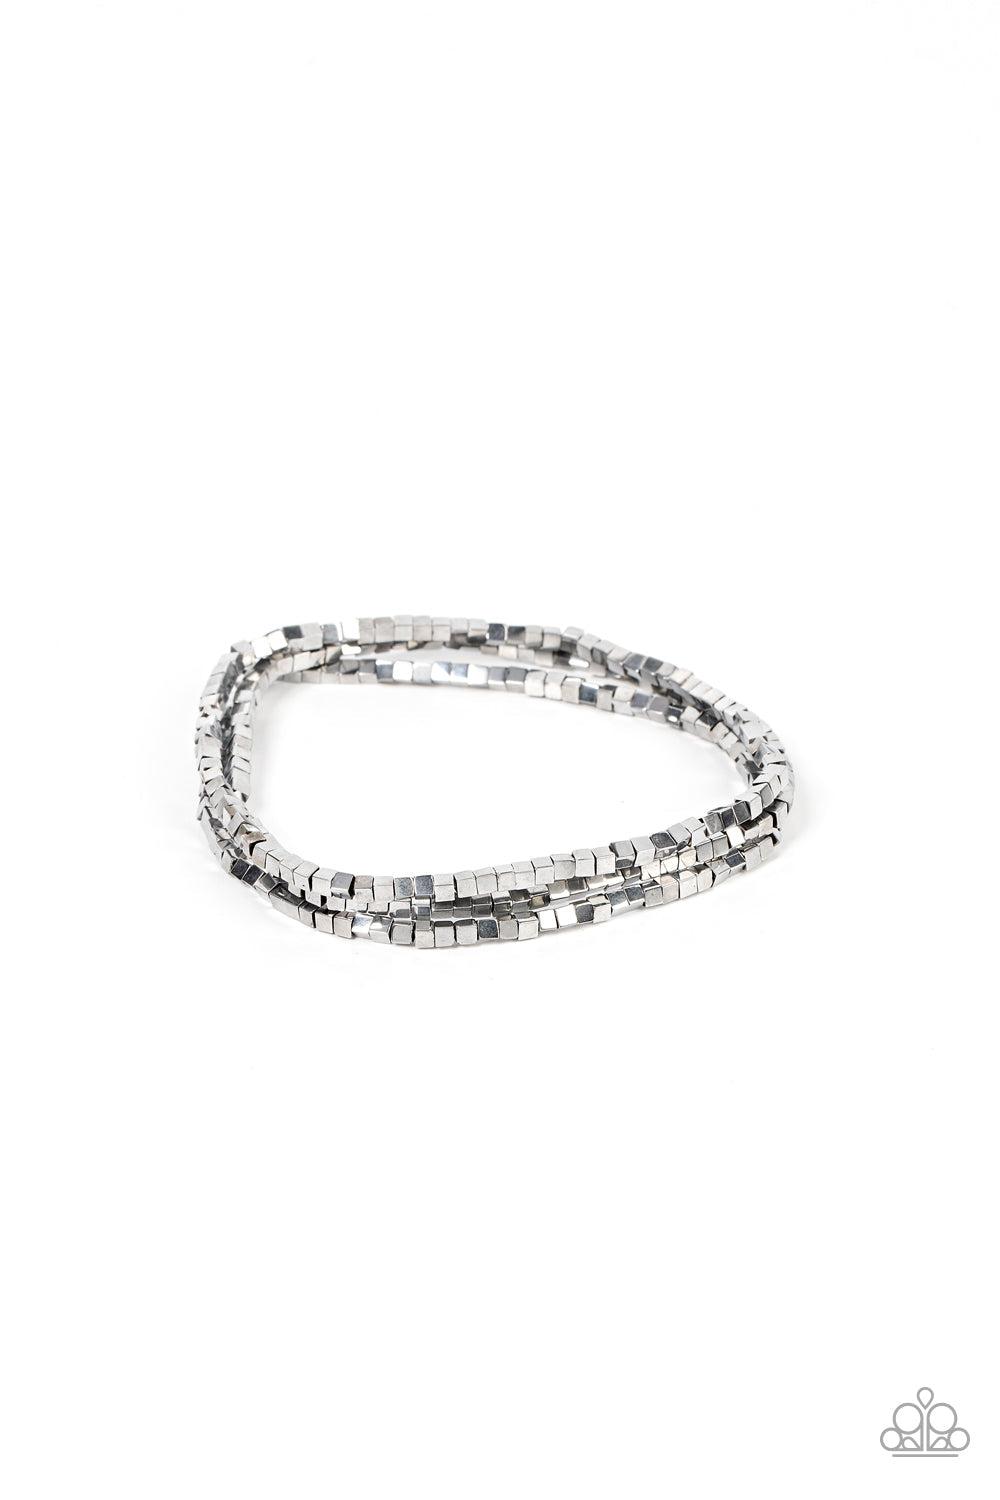 Block Bash Silver Bracelet - Paparazzi Accessories- lightbox - CarasShop.com - $5 Jewelry by Cara Jewels